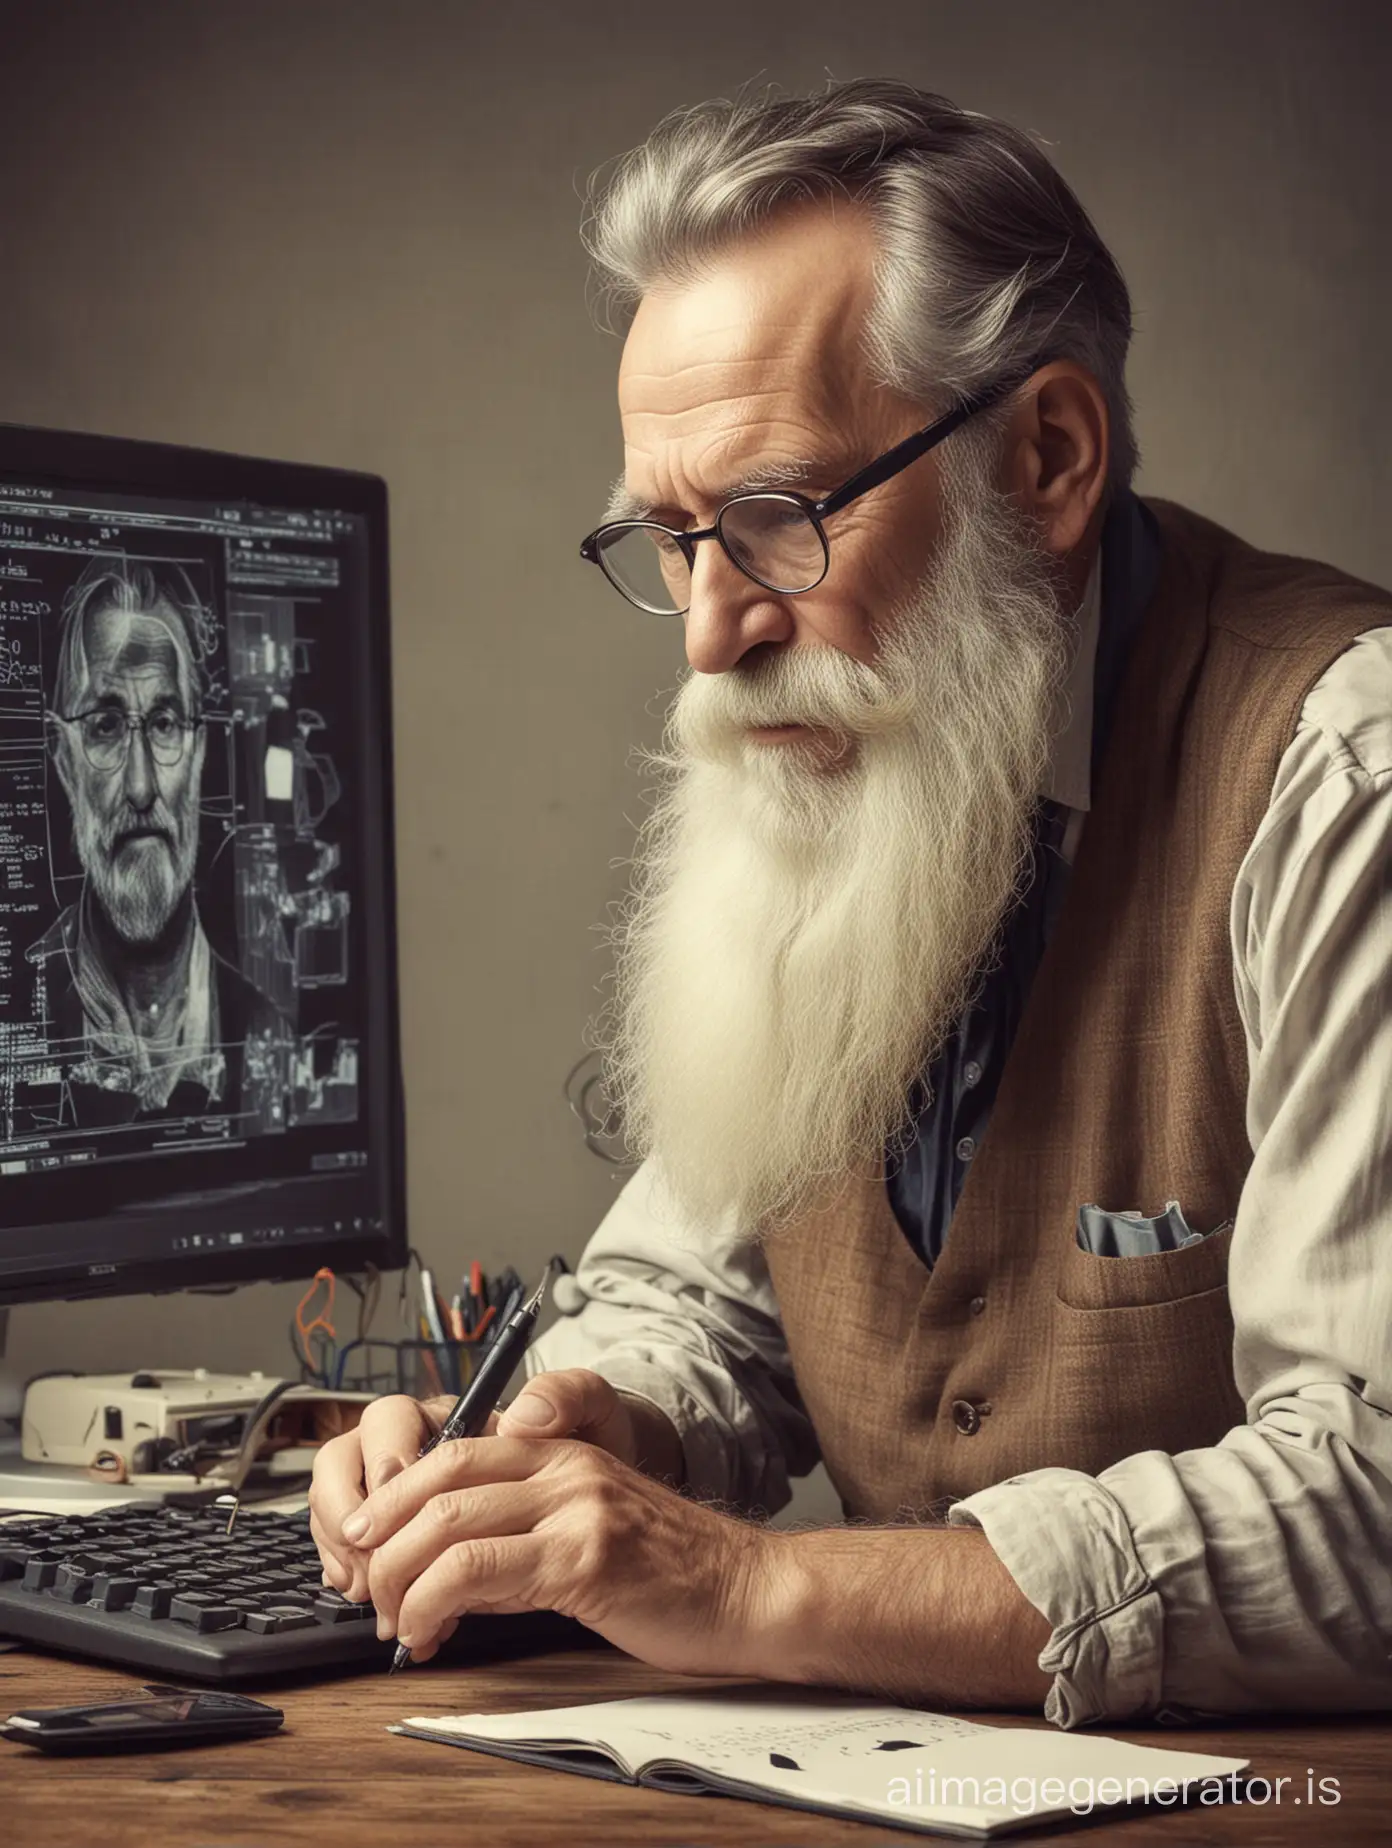 Elderly-Man-Creating-Digital-Textile-Designs-with-Photoshop-in-a-Modern-Vintage-Studio-Setting